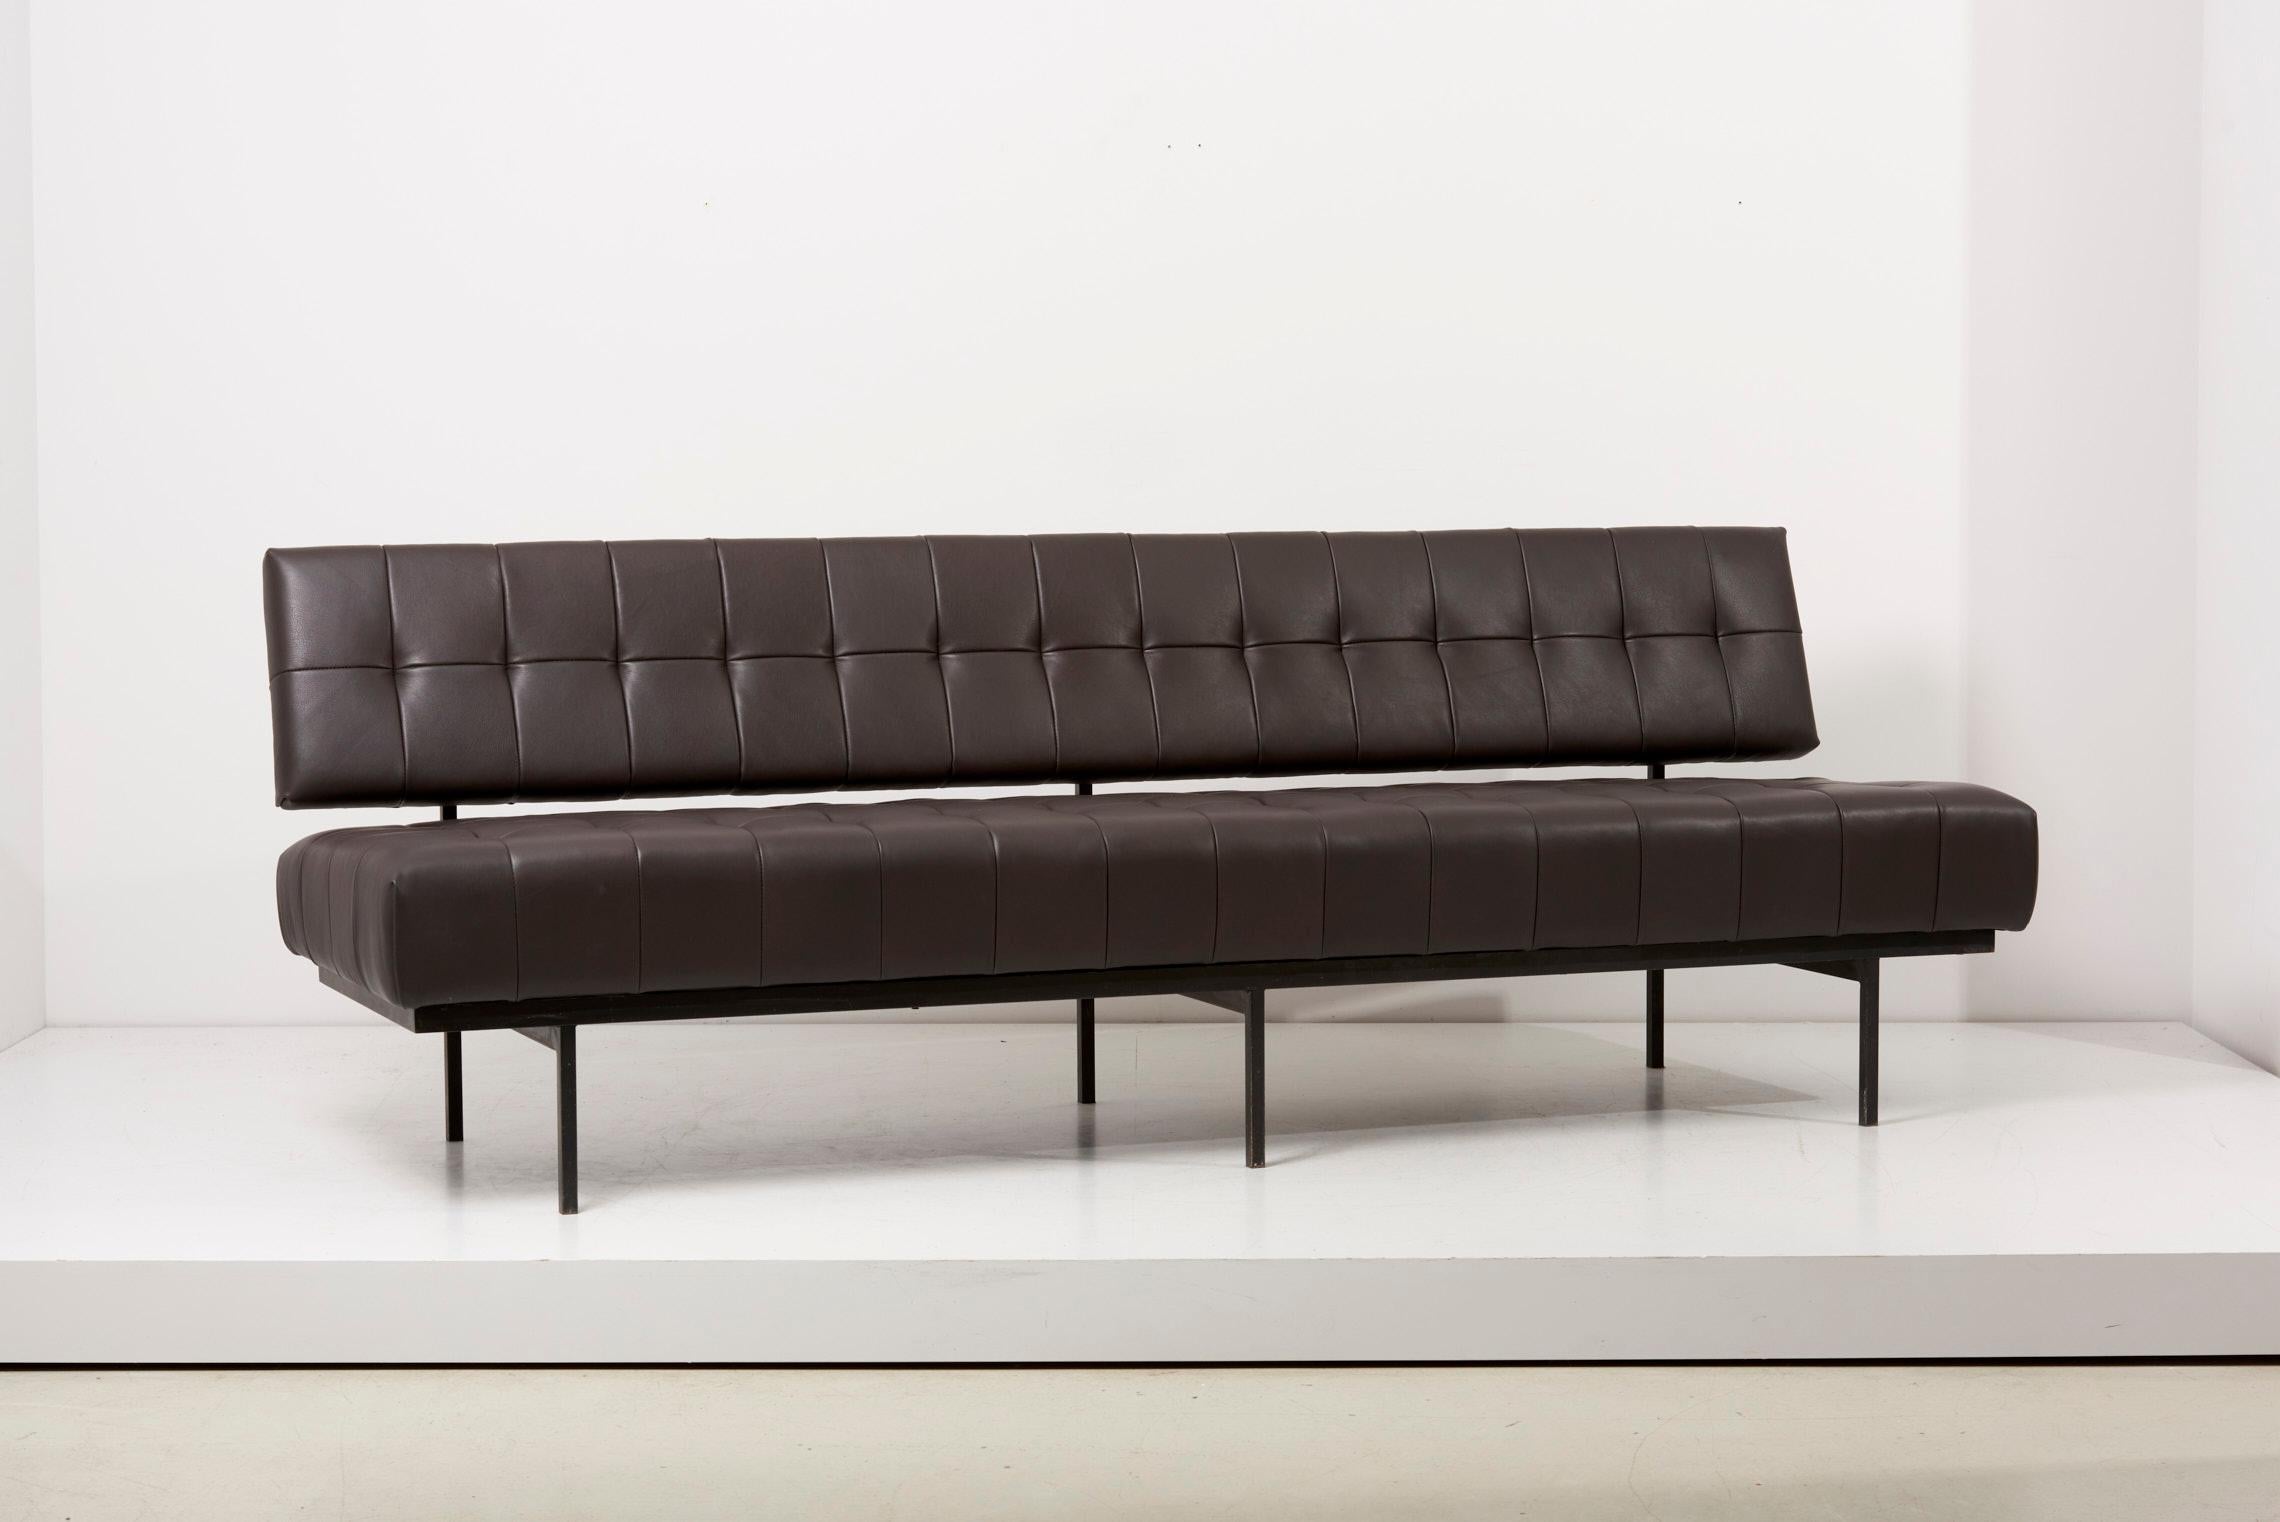 Newly upholstered Knoll International custom sofa in sorensen leather. Germany, 1950s.
 